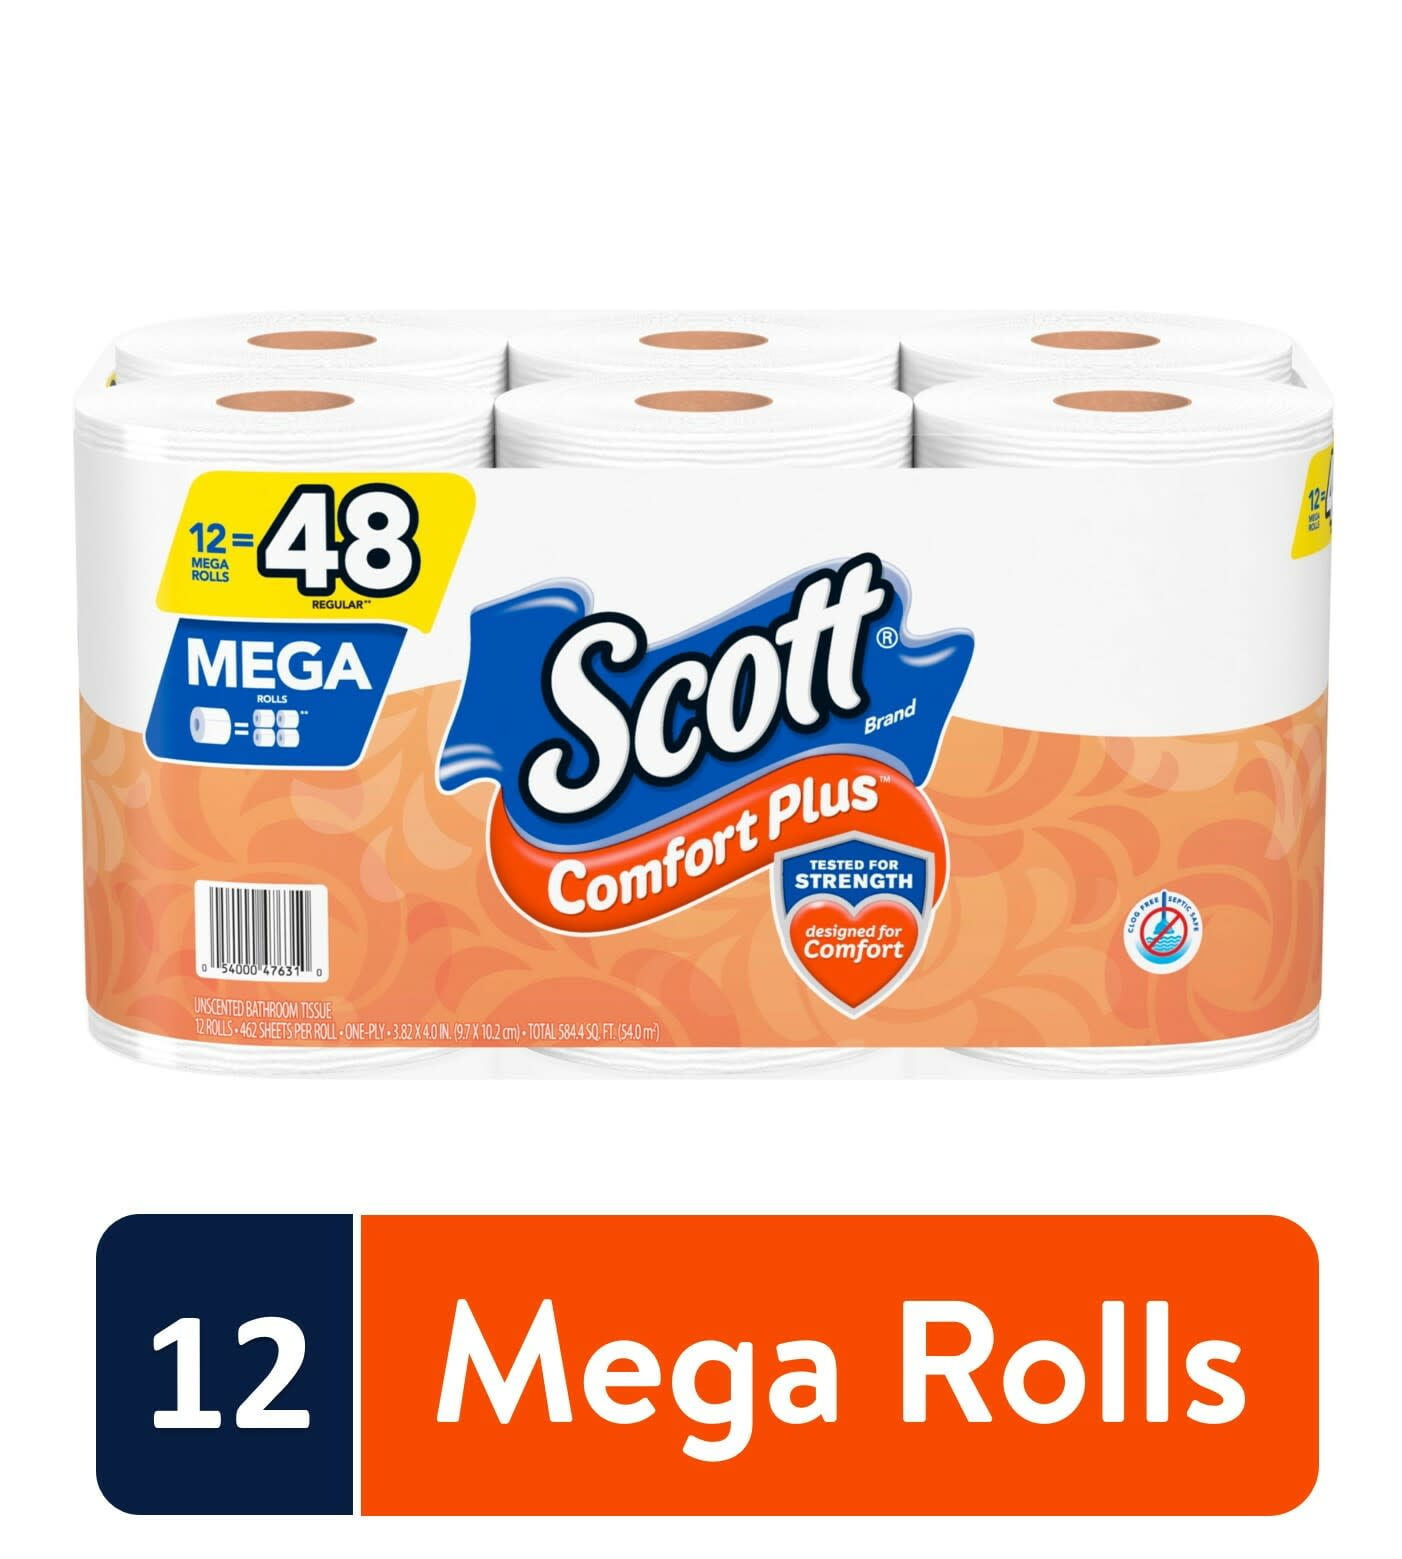 10054000496711 32 4 packs of 8 Scott Toilet Paper Family Pack Bath Tissue Kimberly-Clark Corp